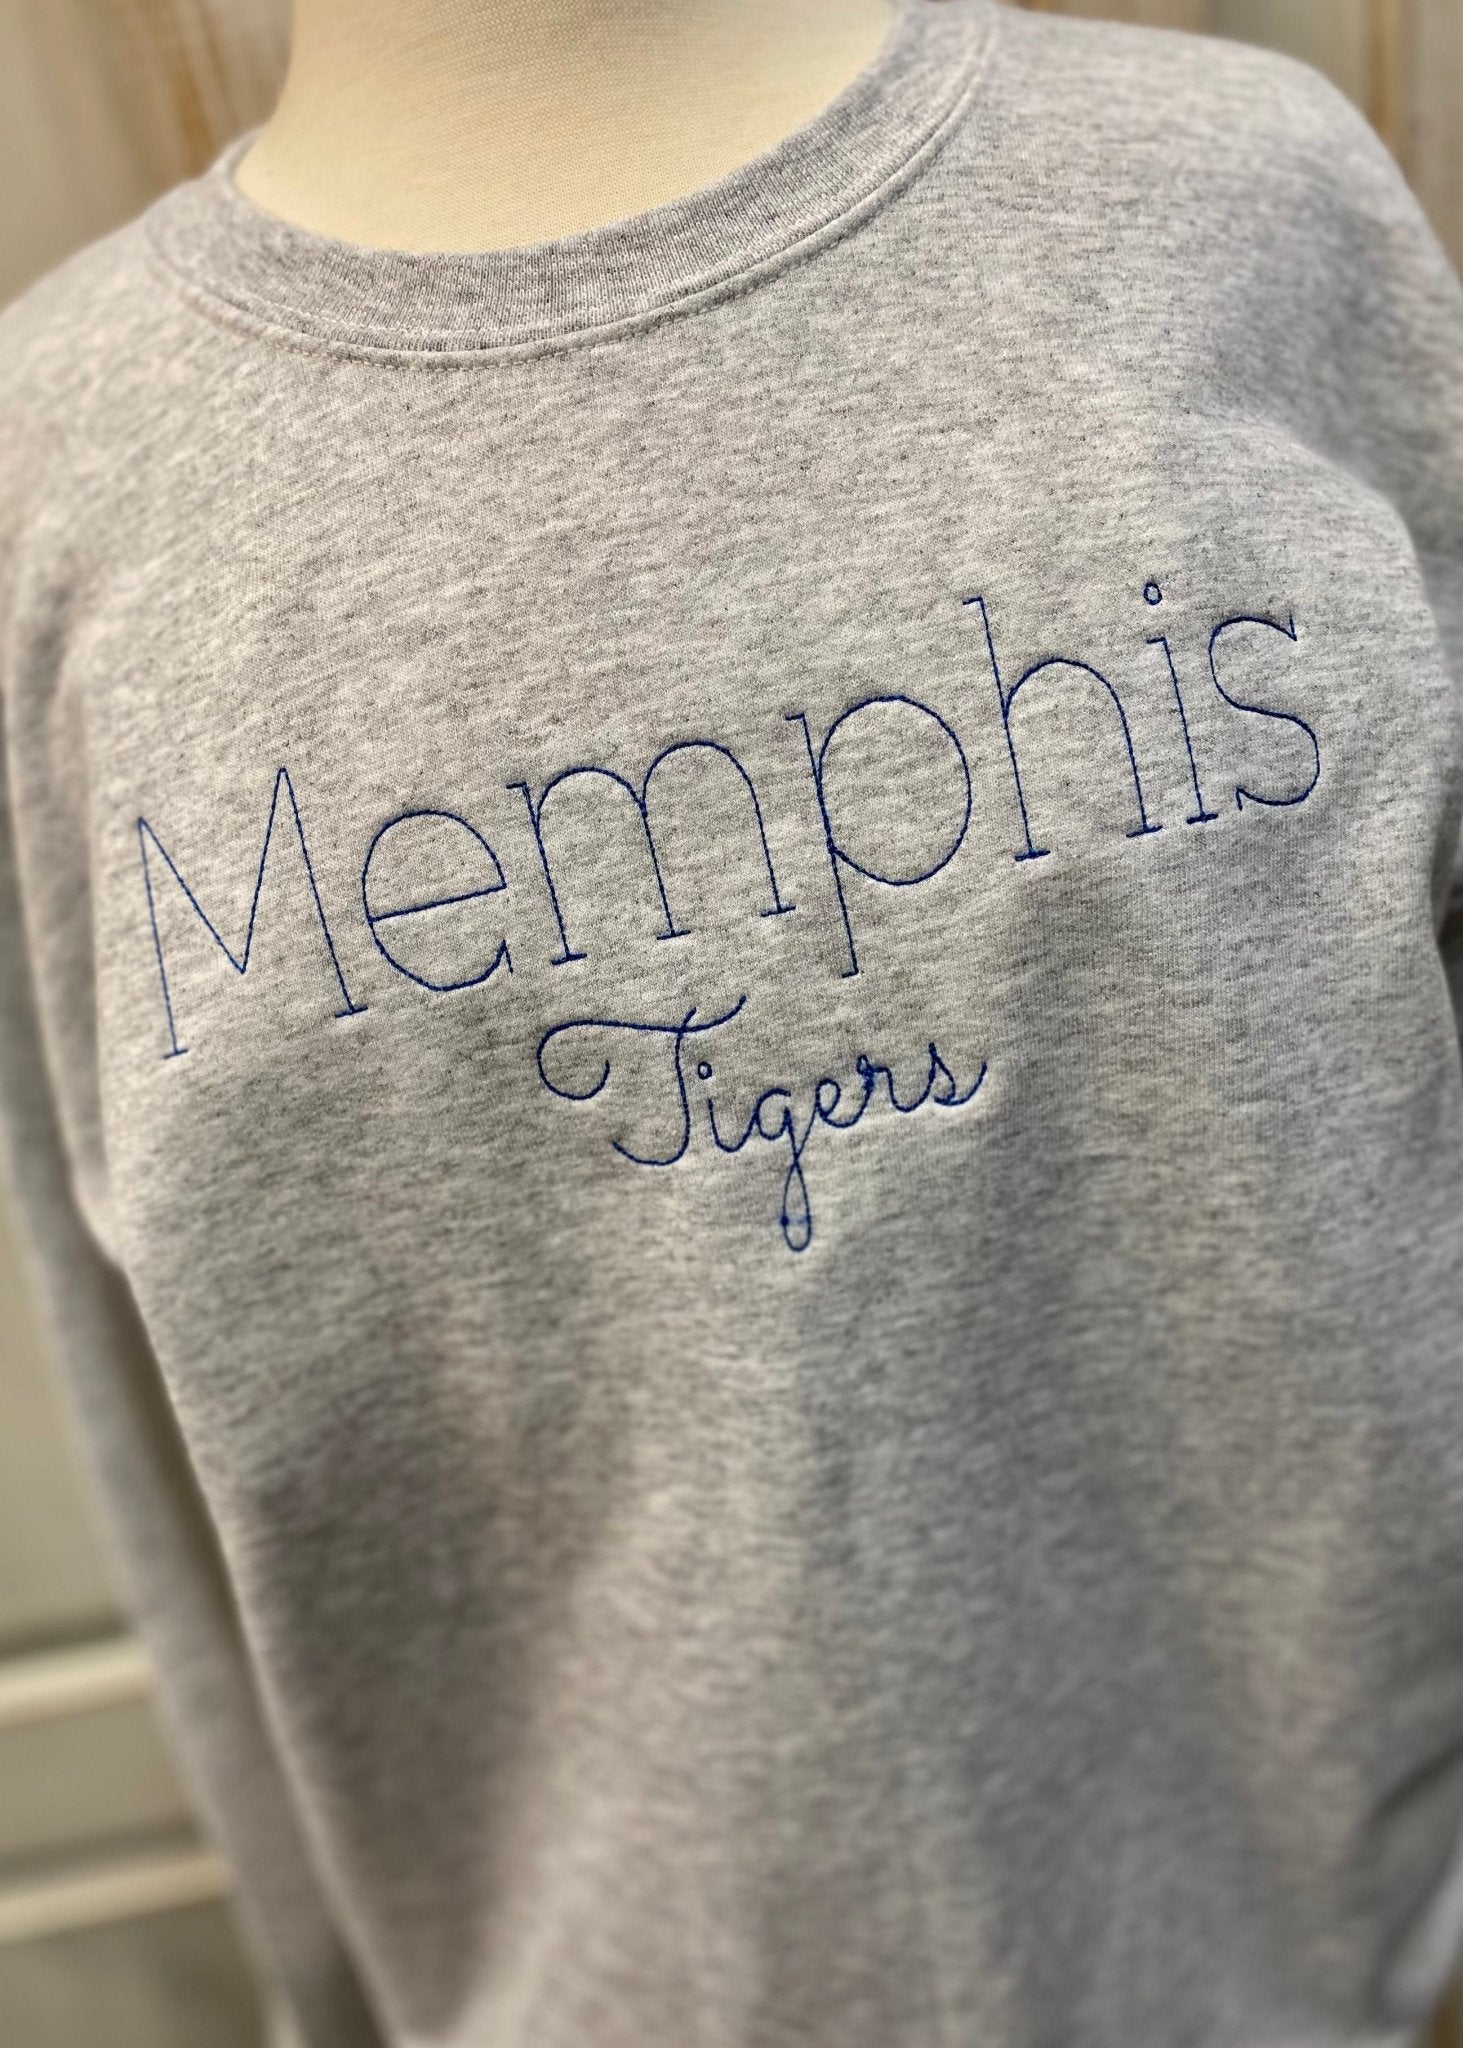 Memphis Tigers Stitched Sweatshirt - Light Grey - sweatshirt -Jimberly's Boutique-Olive Branch-Mississippi